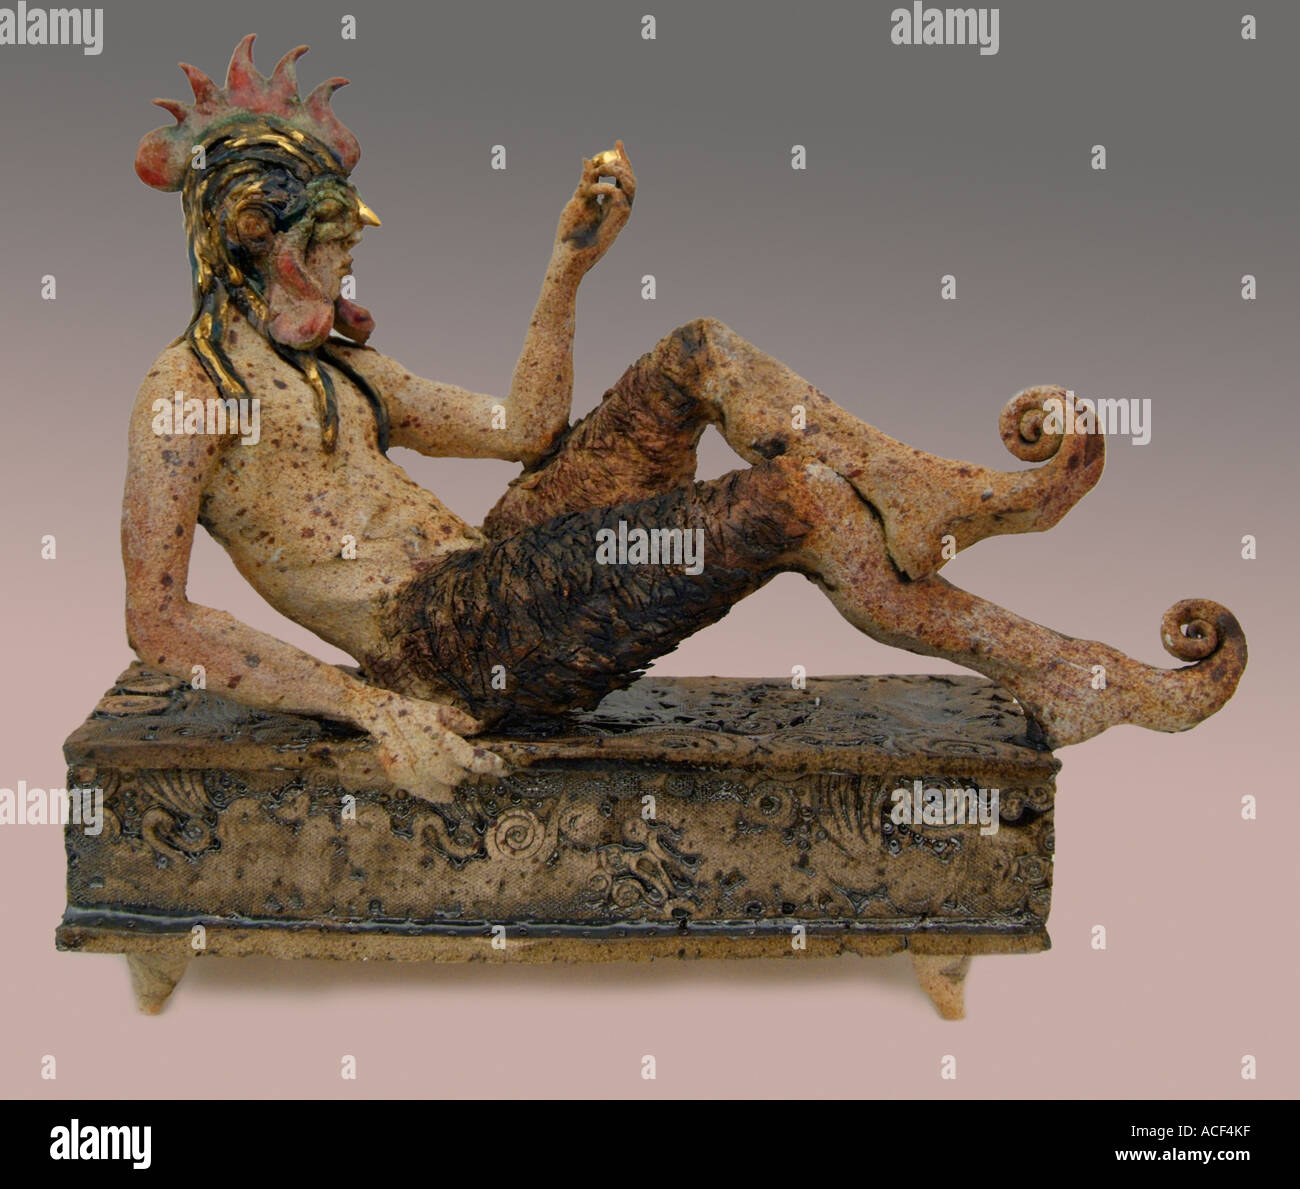 pan figure mythical figure seated on box Close up resting half human goat Greek mythology fantasy cloven hoof Stock Photo